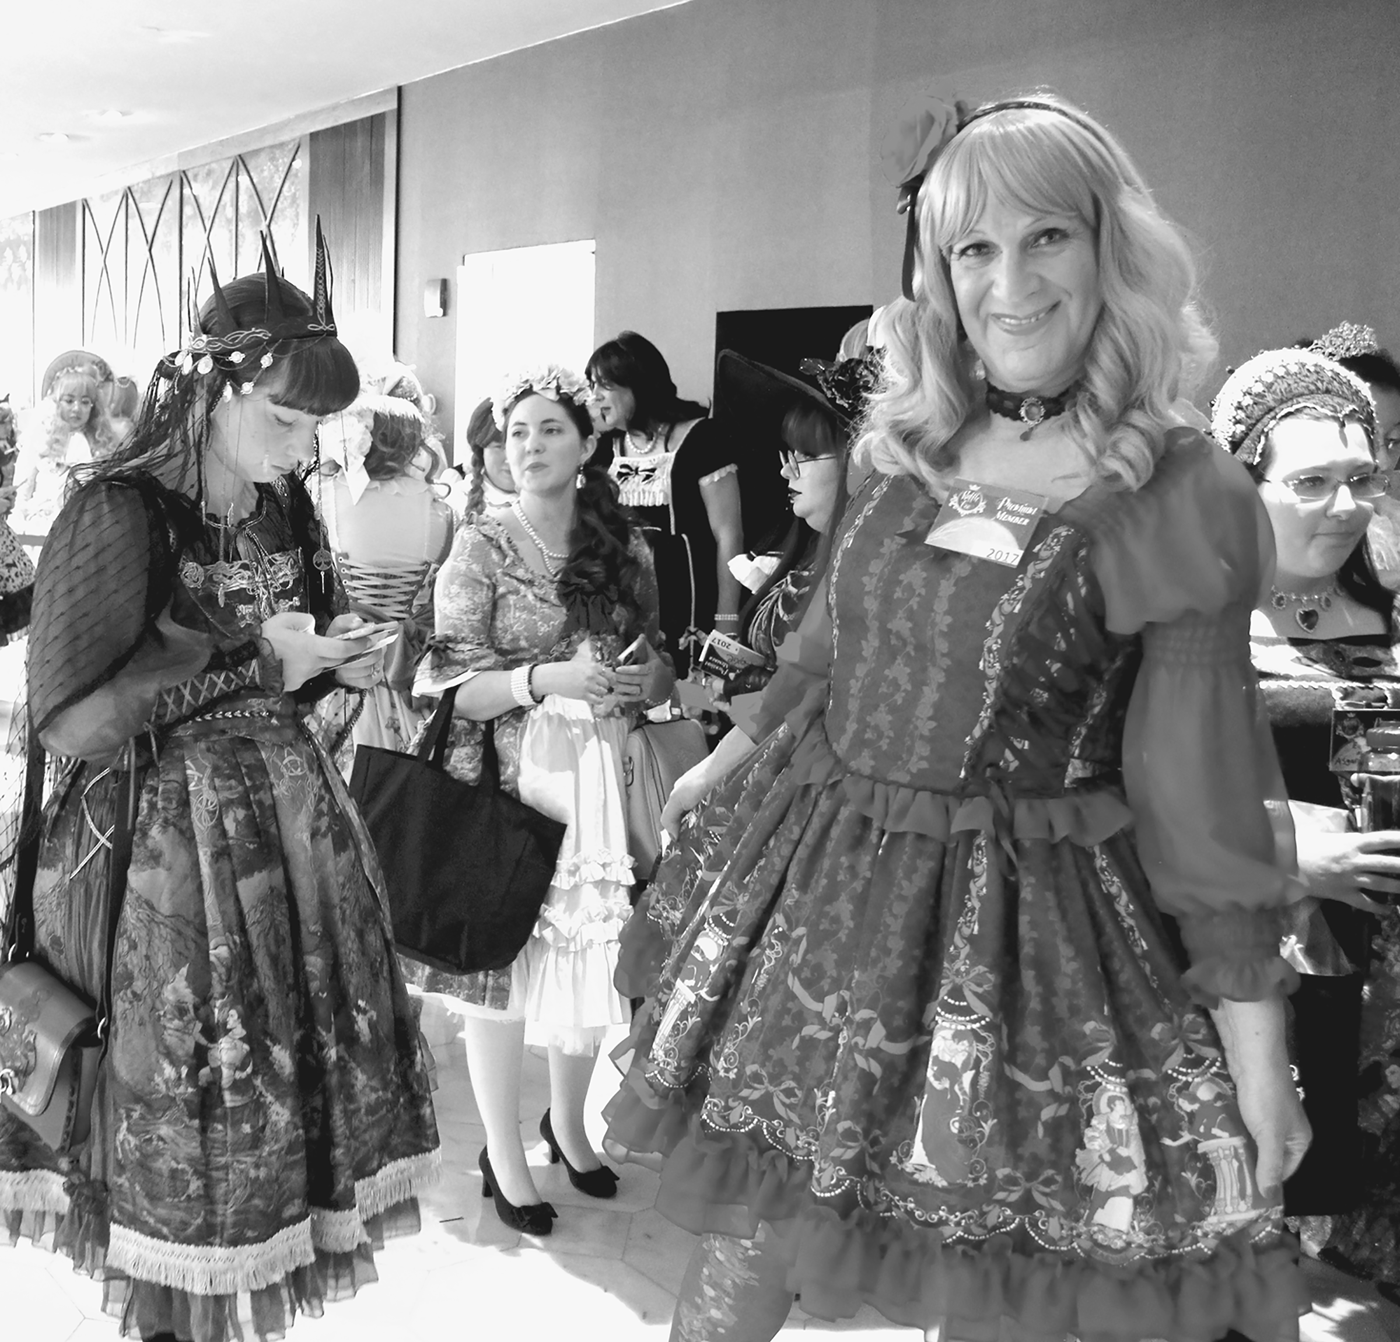 Lolita Style: The Hidden Feminism of Fairytale Fashion Fantasies